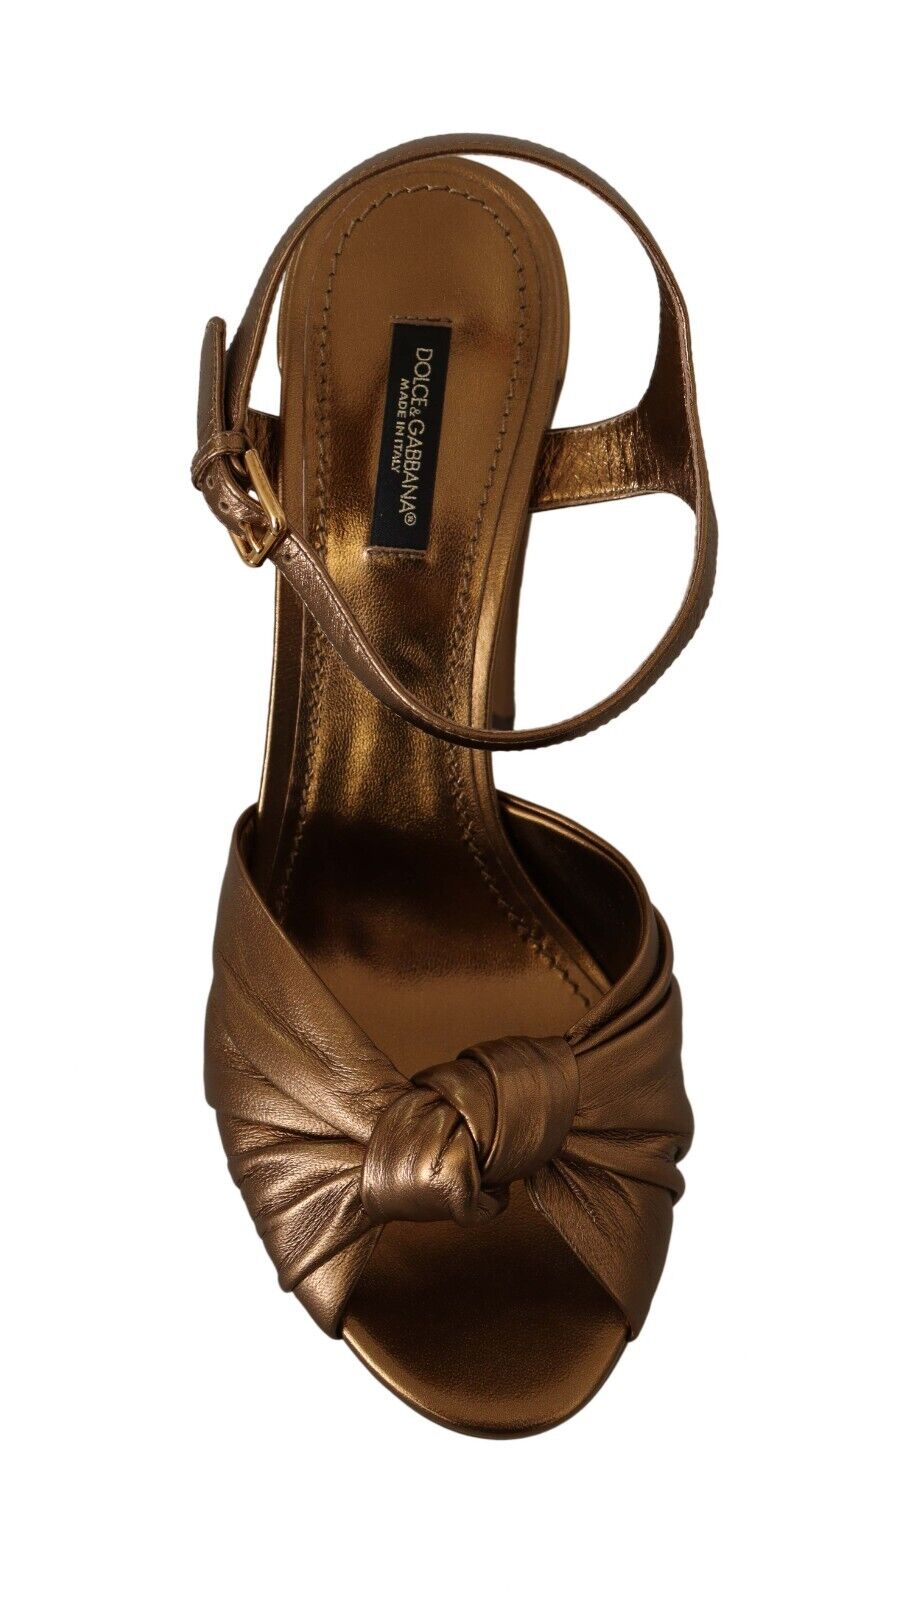 Bronze Leather Ankle Strap Platform Sandals Shoes